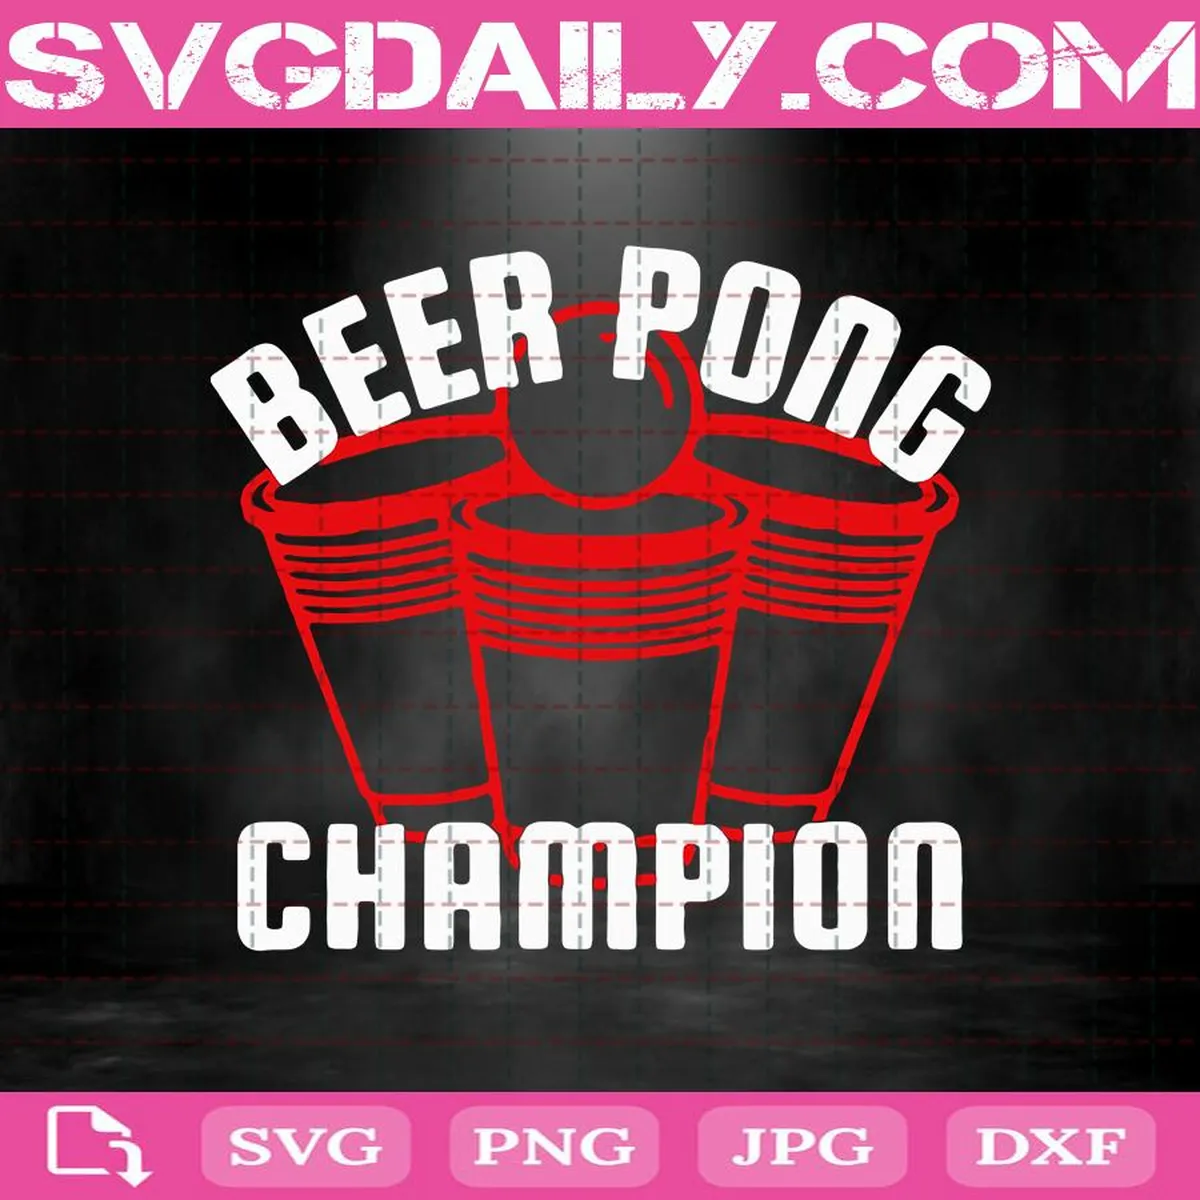 Beer Pong Champion Student's University Drinking Game Svg, Drinking Svg, Beer Pong Champion Svg, Champion Svg